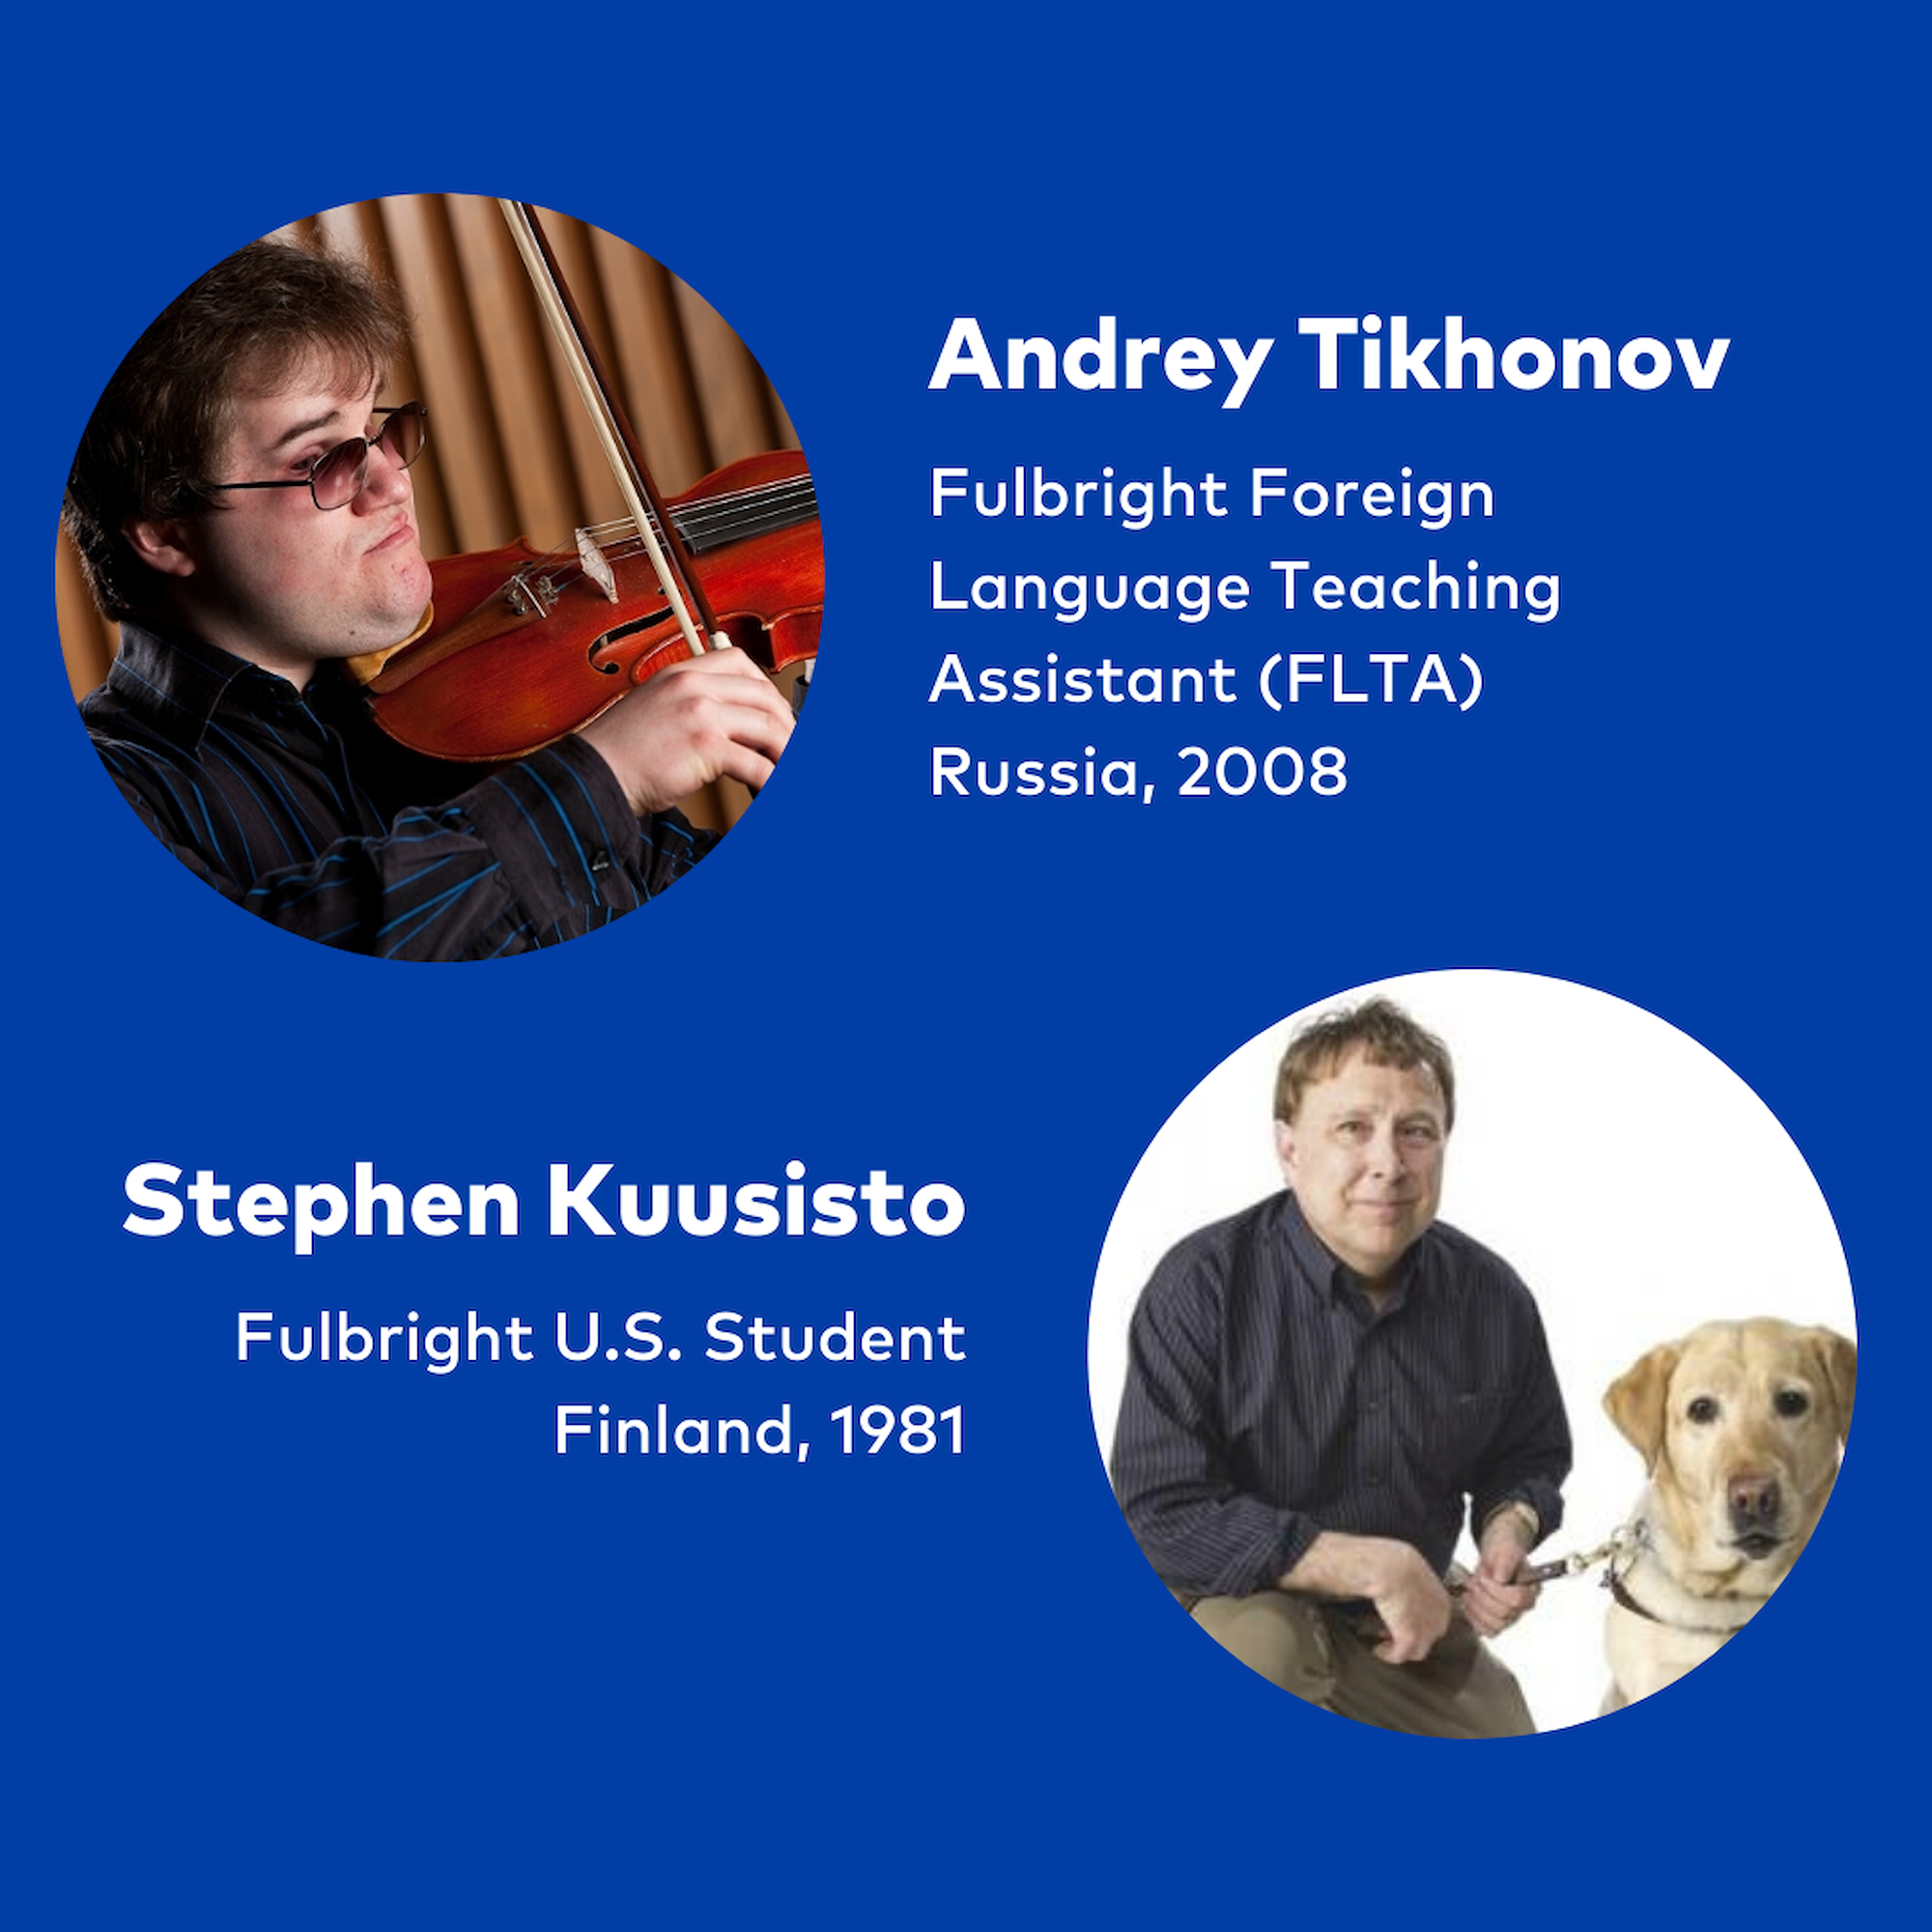 Andrey Tikhonov and Stephen Kuusisto